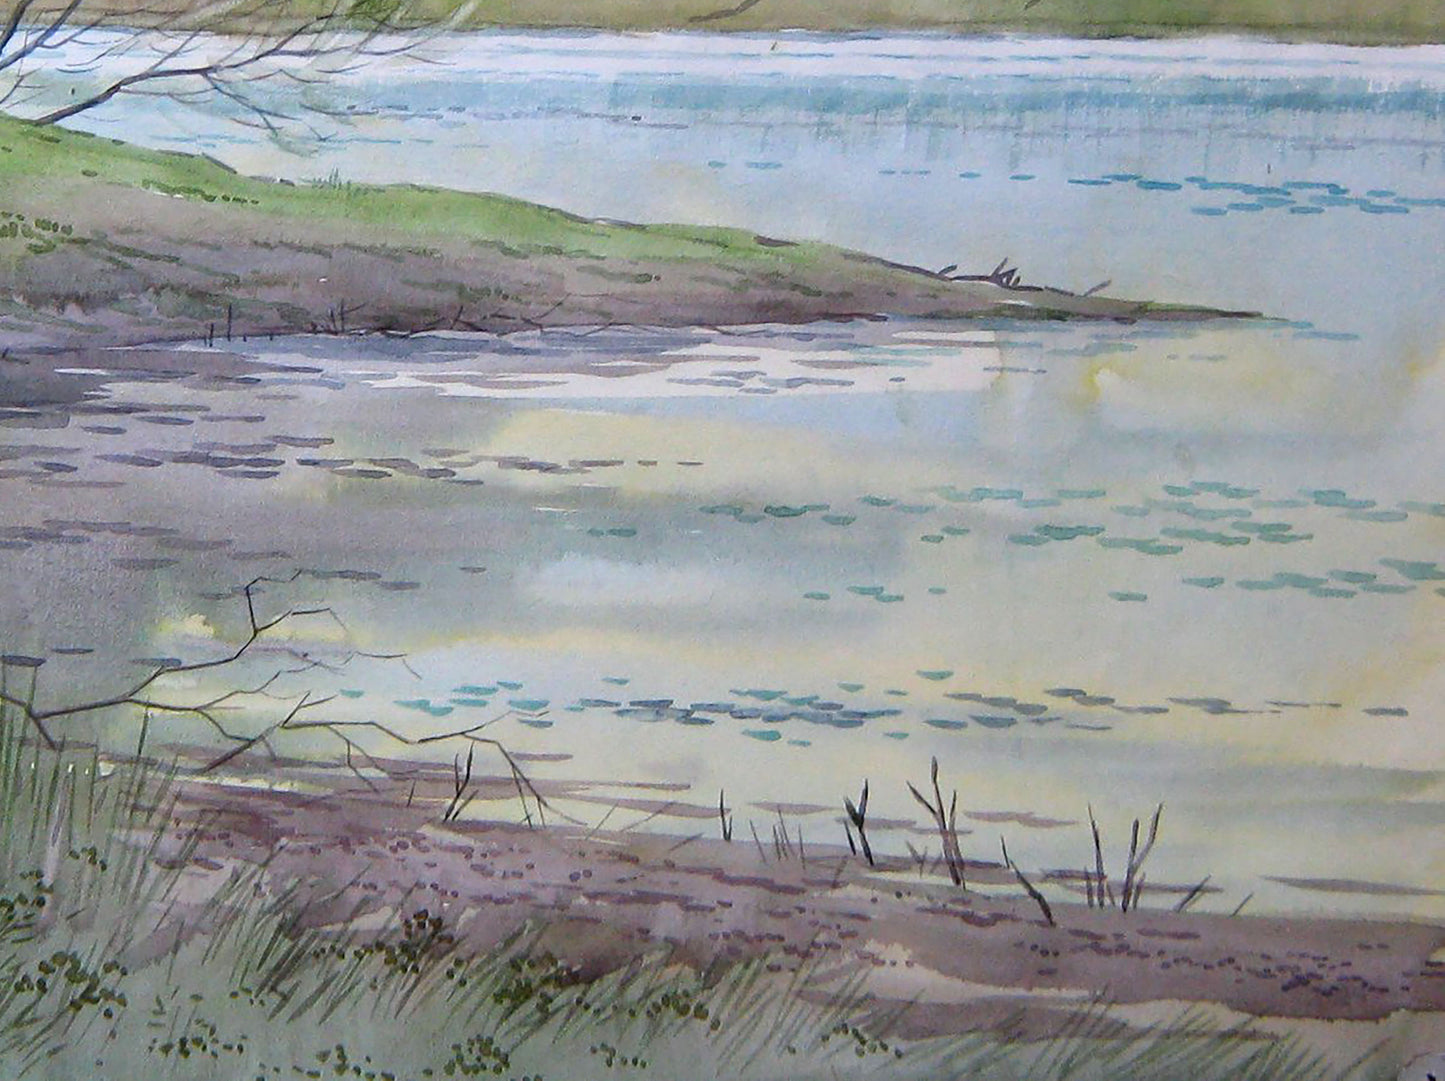 Watercolor painting Spring landscape Savenets Valery